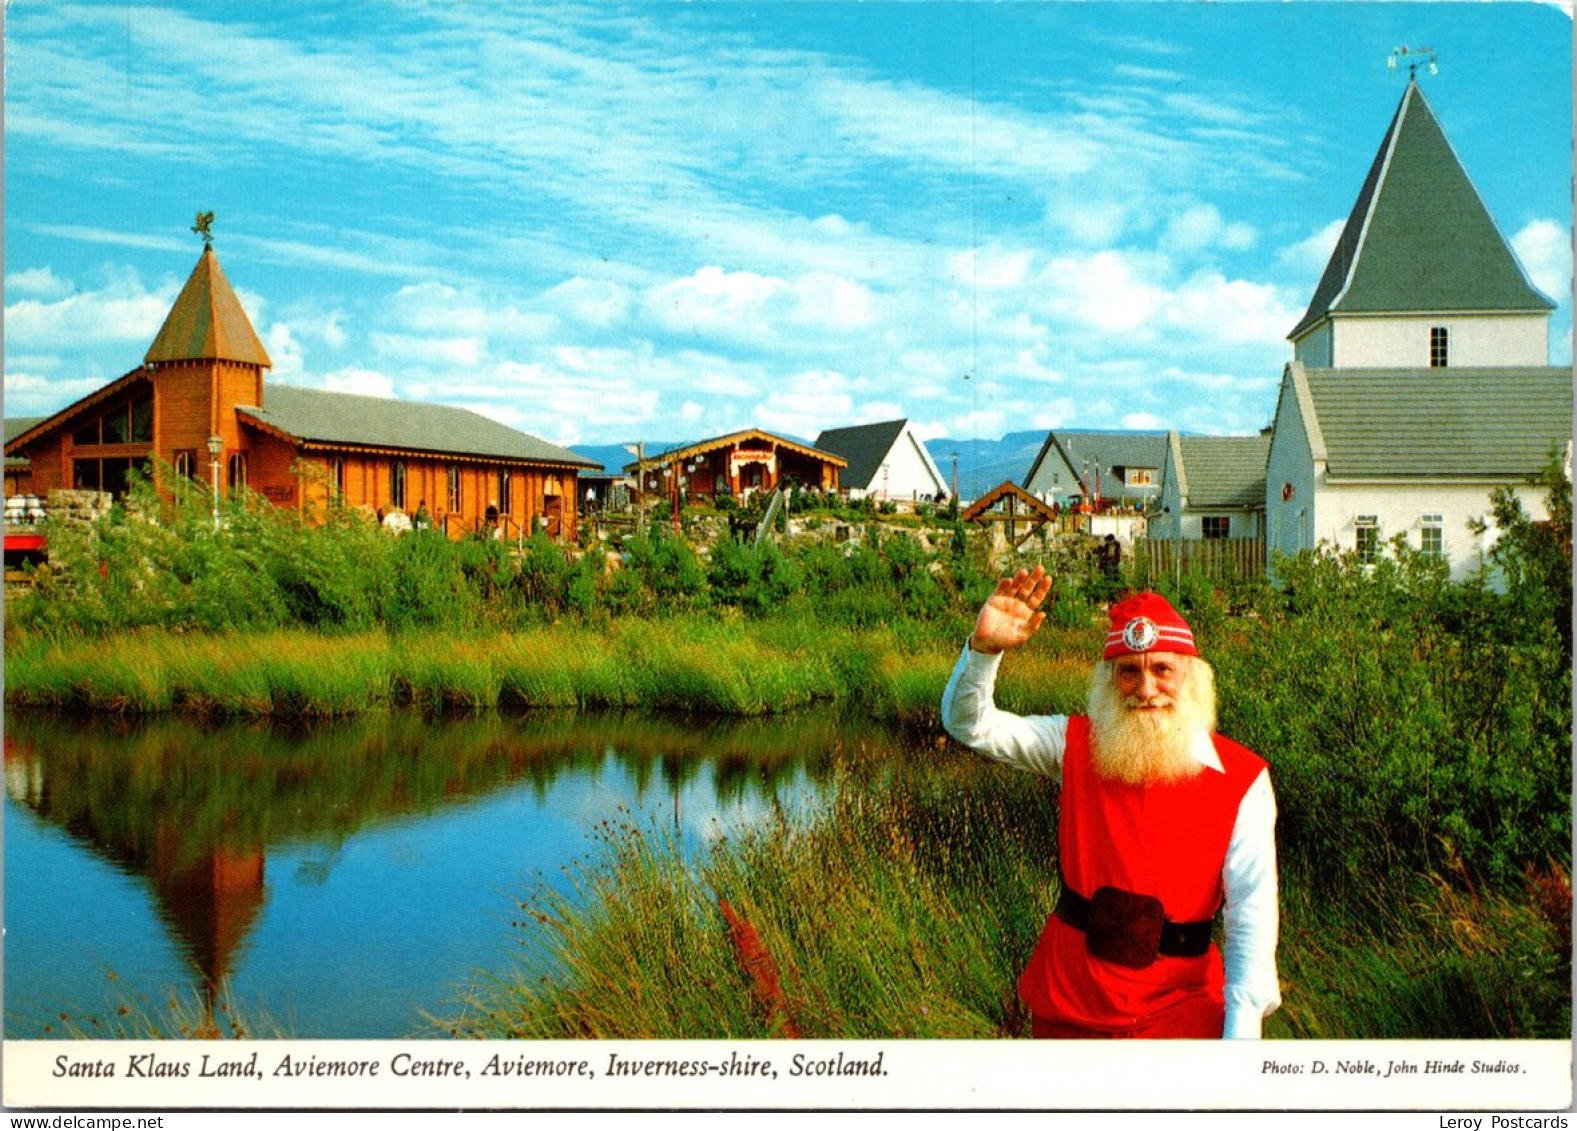 #3602 - Santa Klaus Land, Aviemore Centre, Scotland, Inverness-shire - Inverness-shire